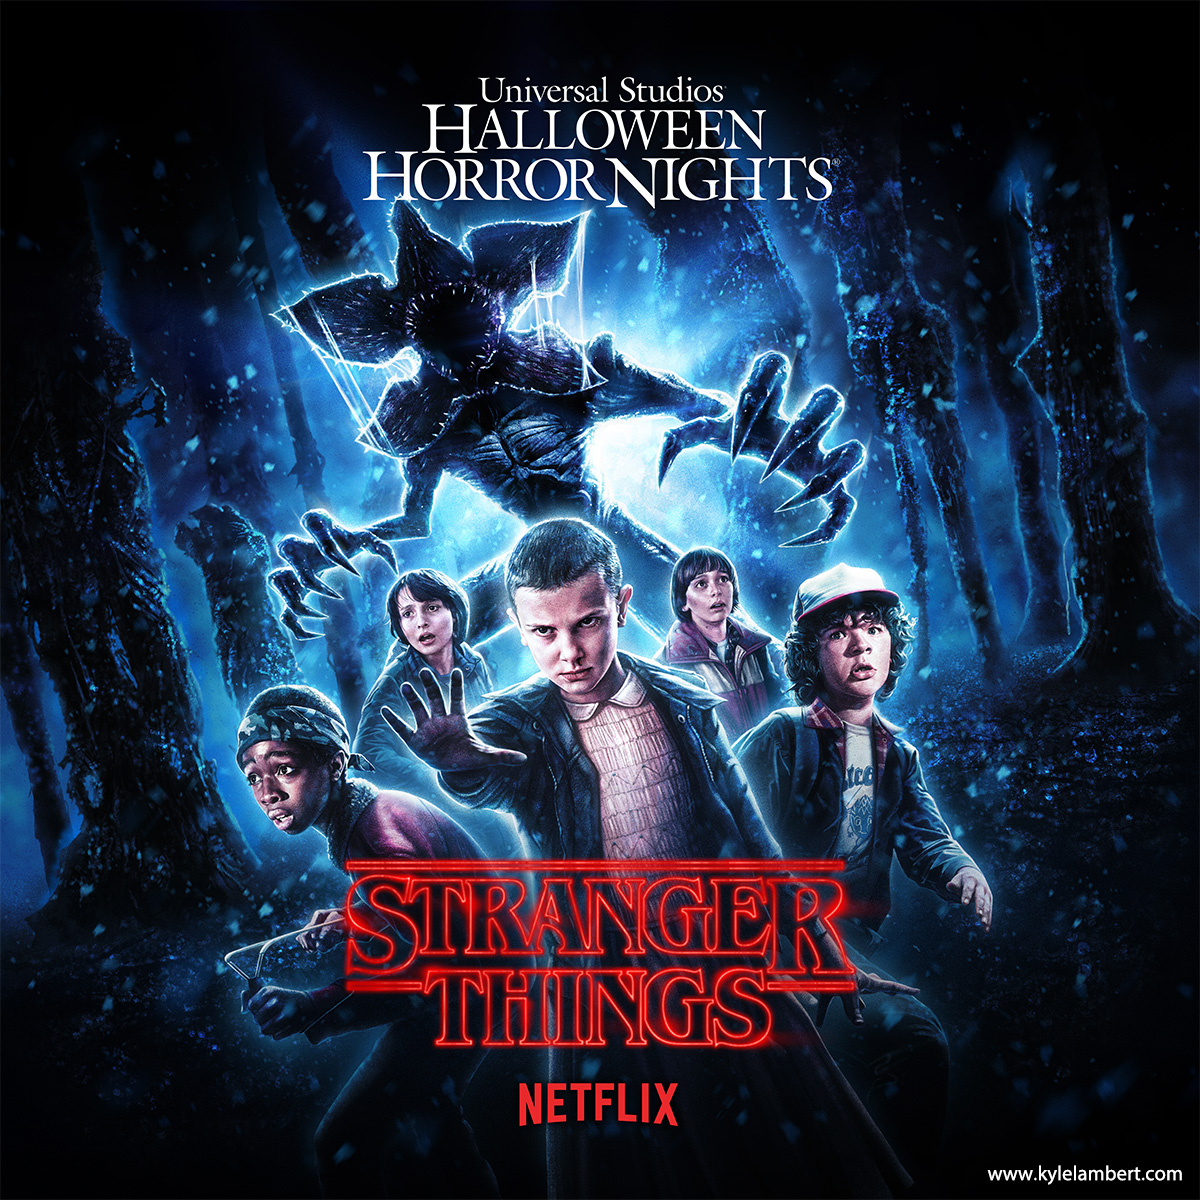 Stranger Things - Universal Studios Halloween Horror Nights Key Art by Kyle Lambert